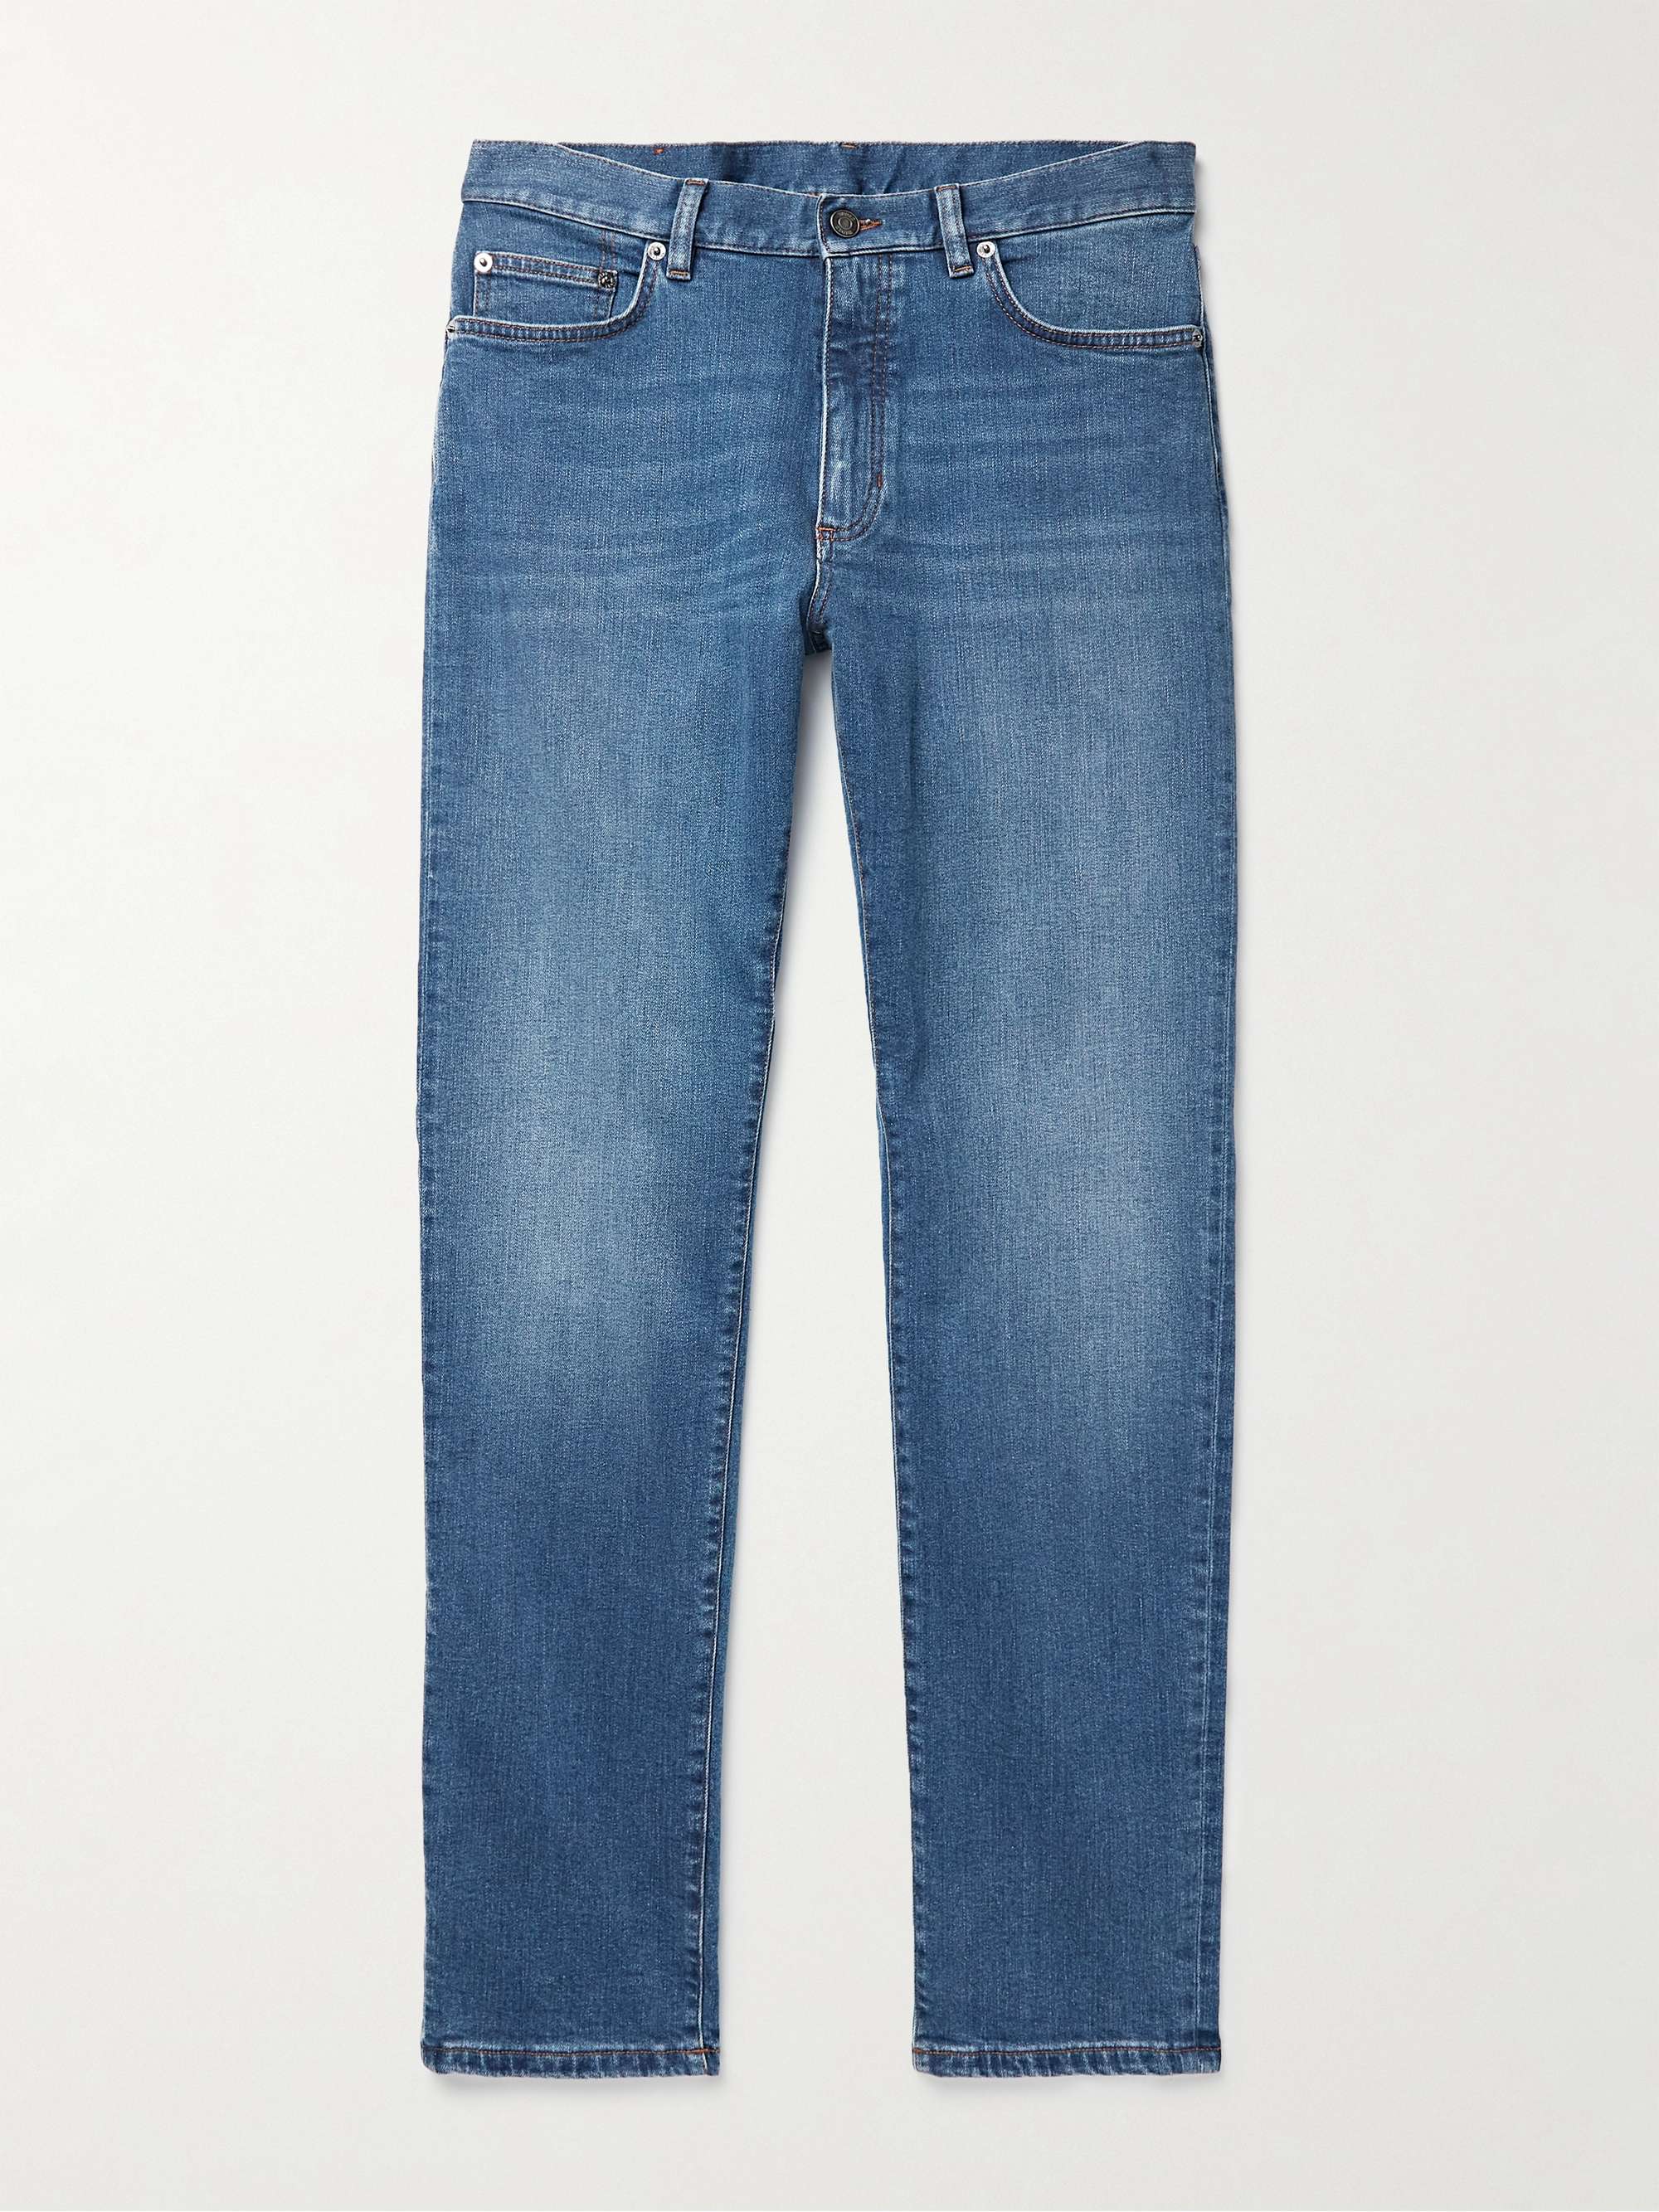 ZEGNA City Slim-Fit Jeans | MR PORTER